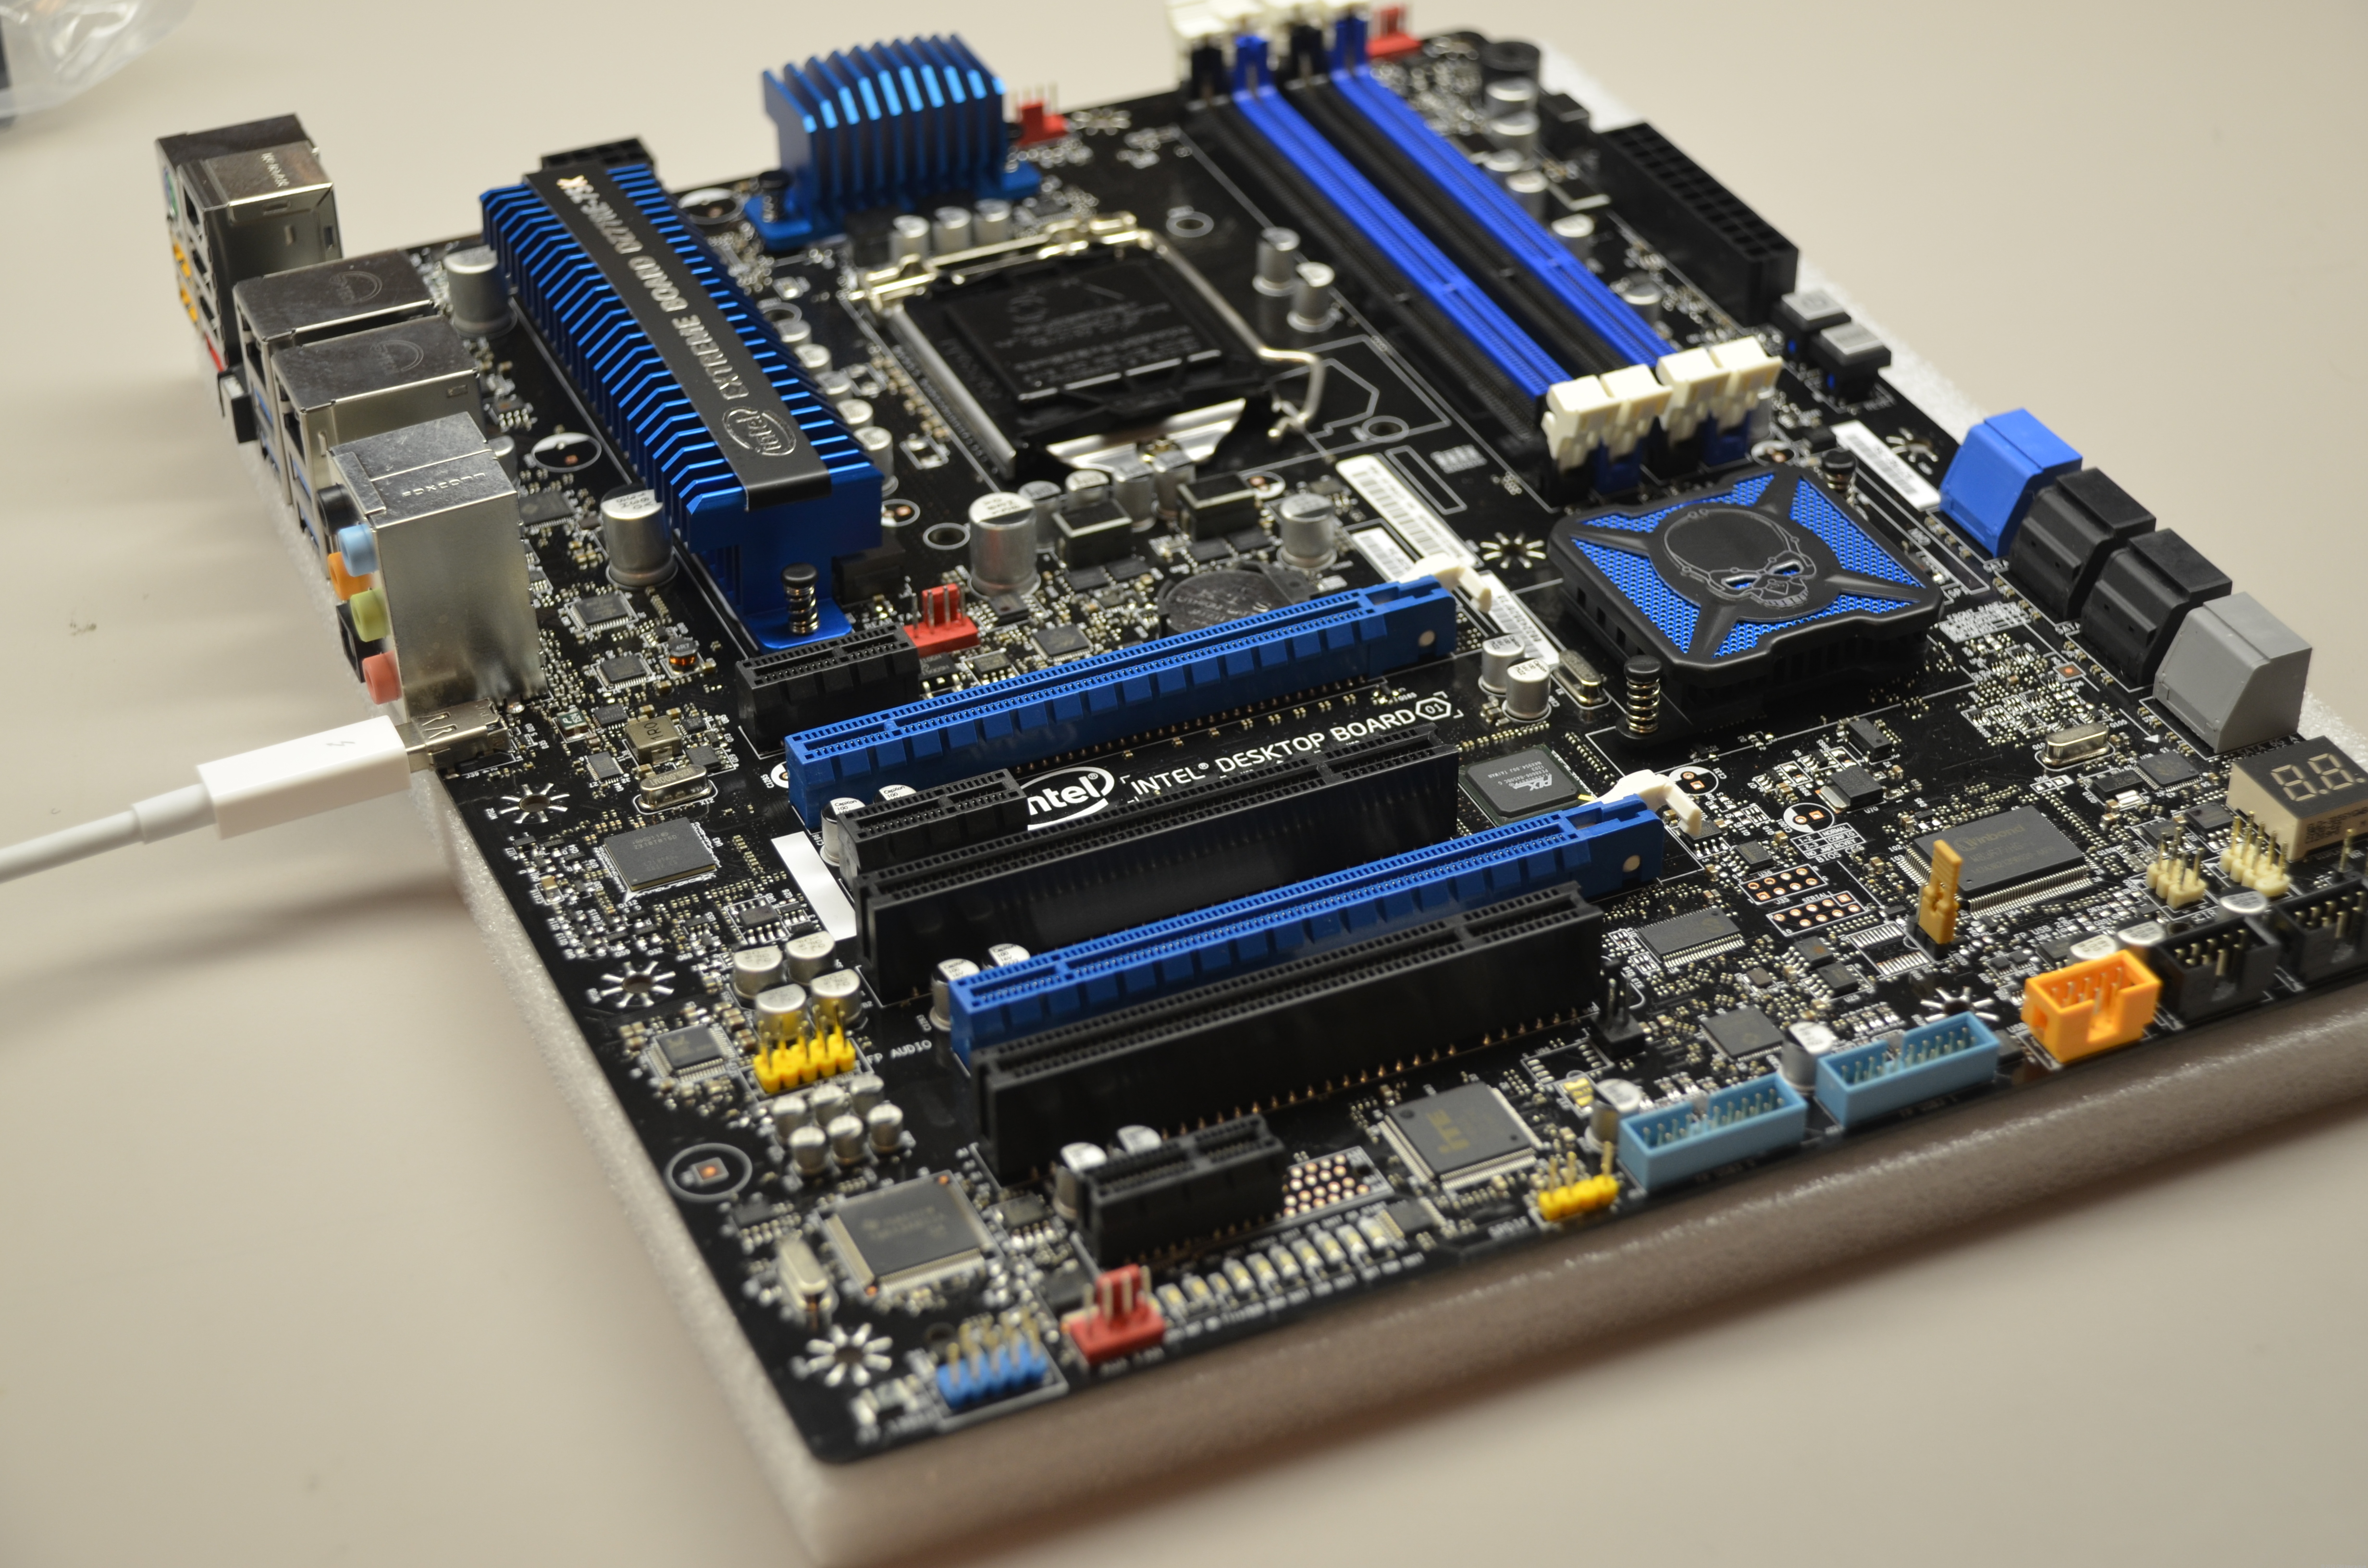 Intel's latest desktop board: Finally Thunderbolt and USB 3.0 ...